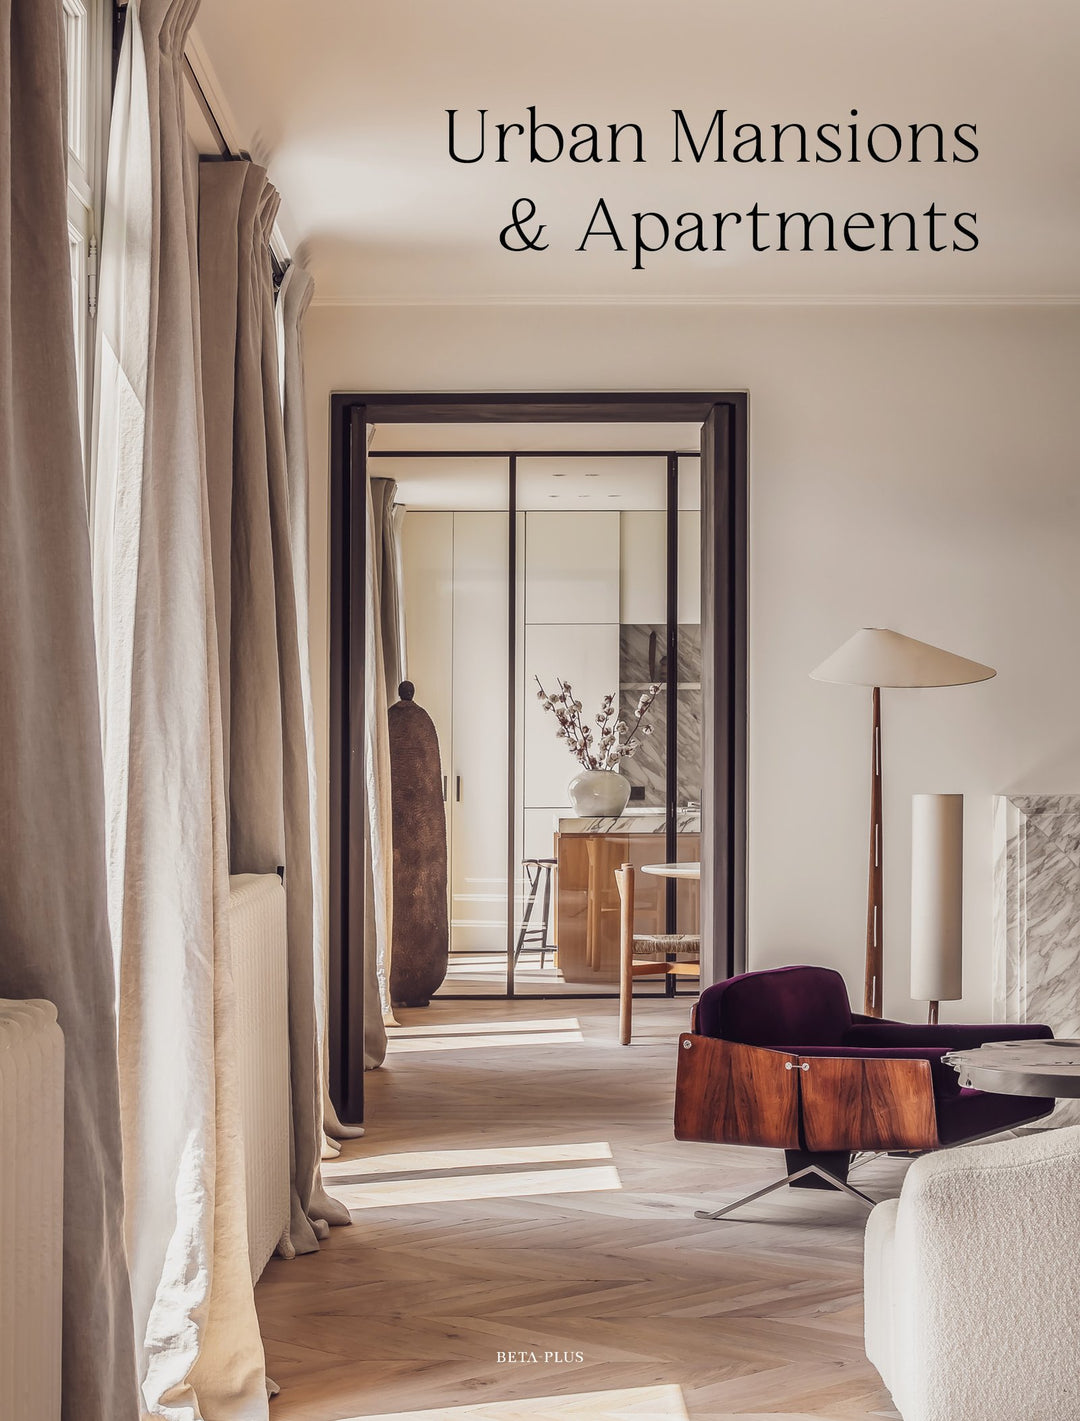 Libro Urban Maisons & Apartments